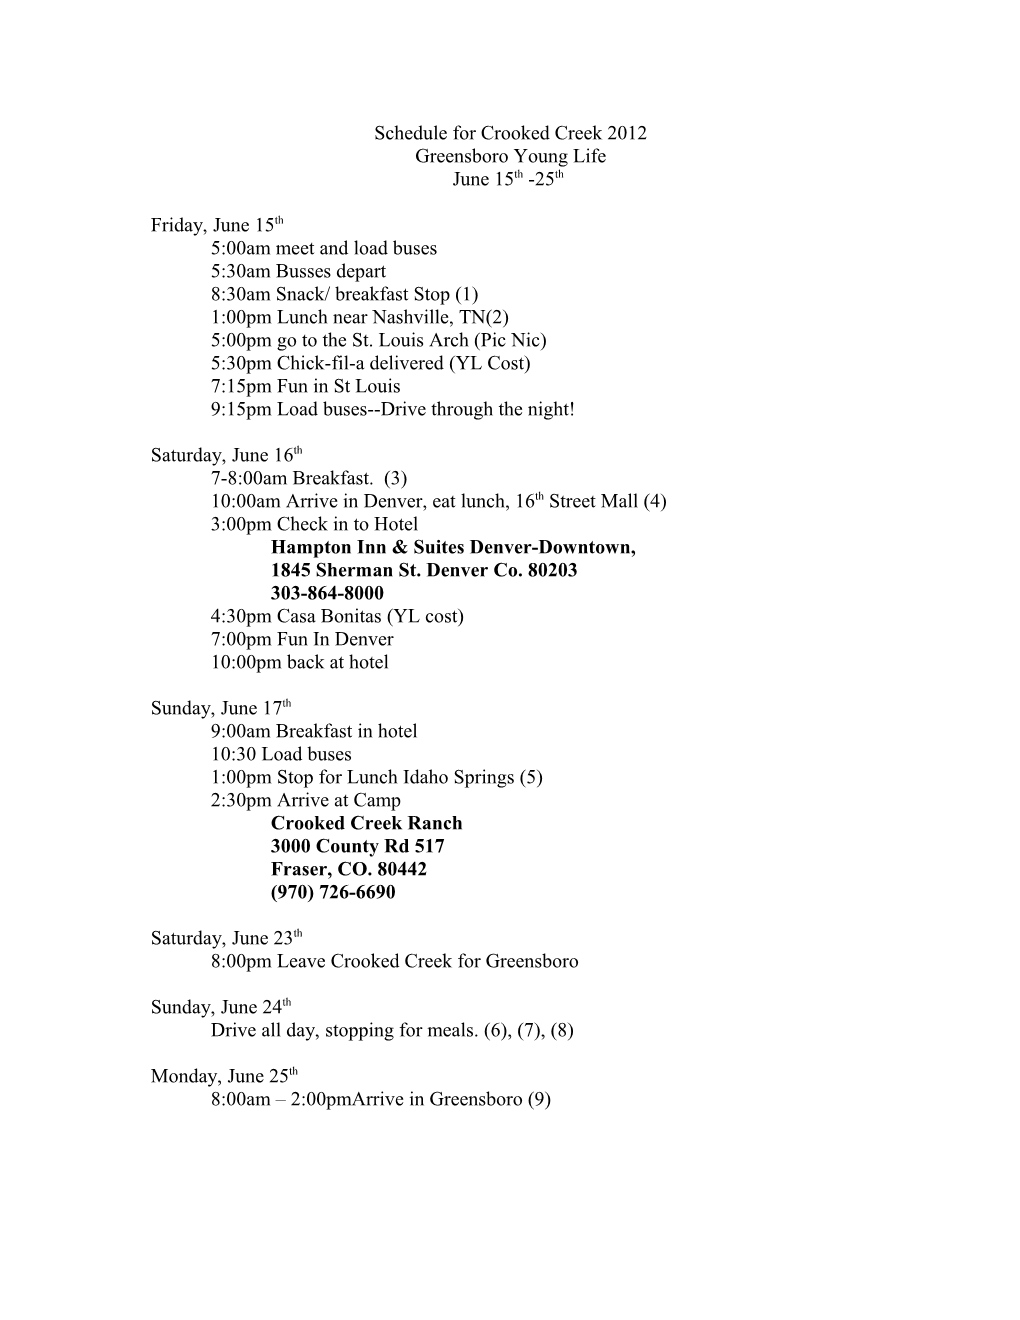 Schedule for Frontier Ranch 2006